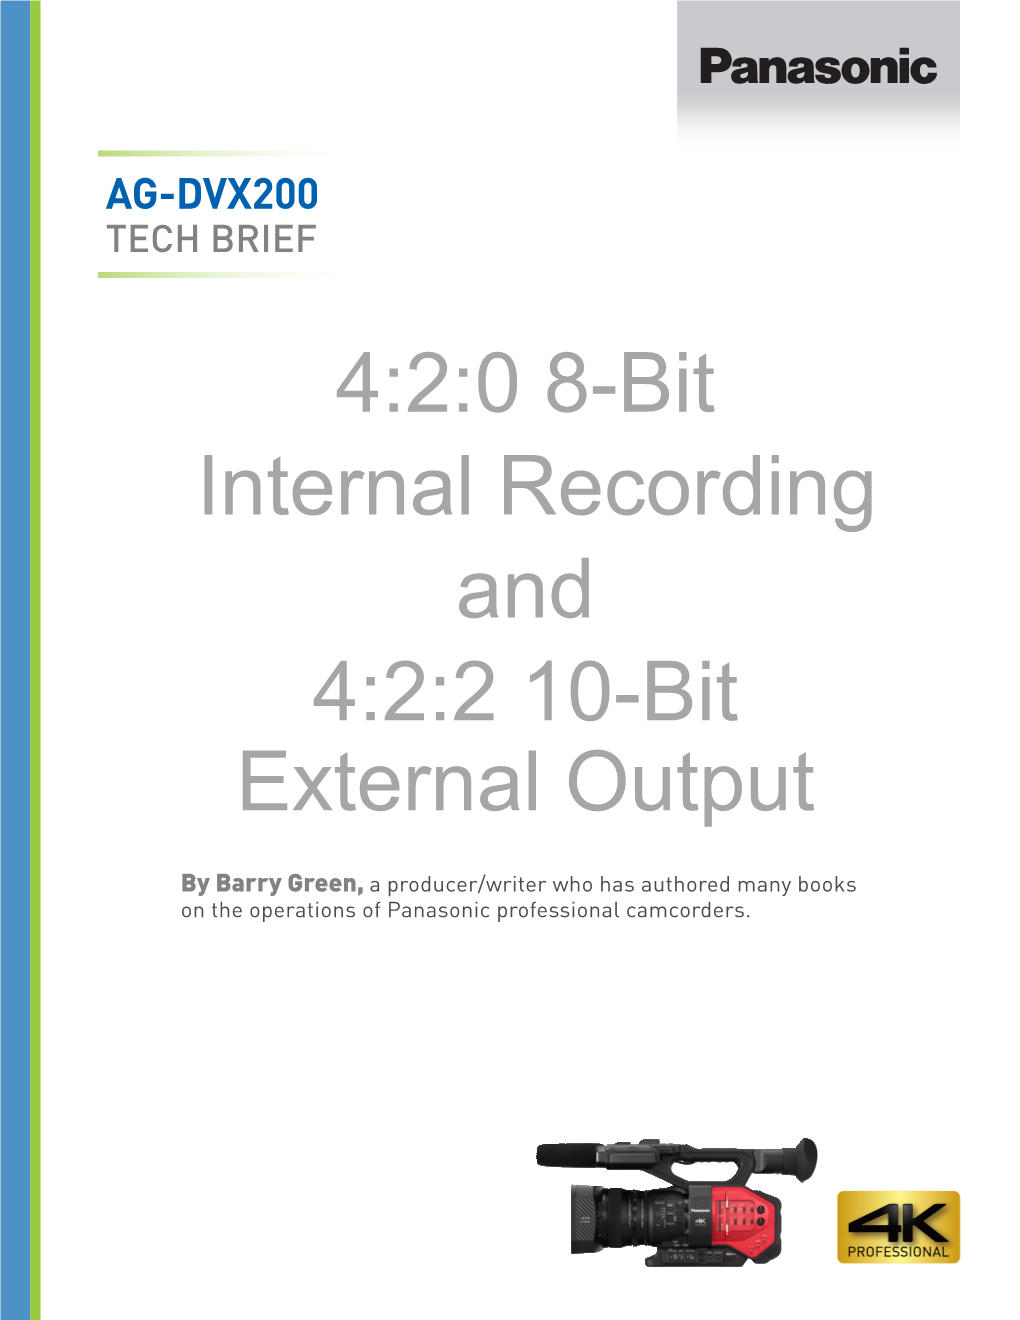 4:2:0 8Bit Internal Recording and 4:2:2 10Bit External Recording